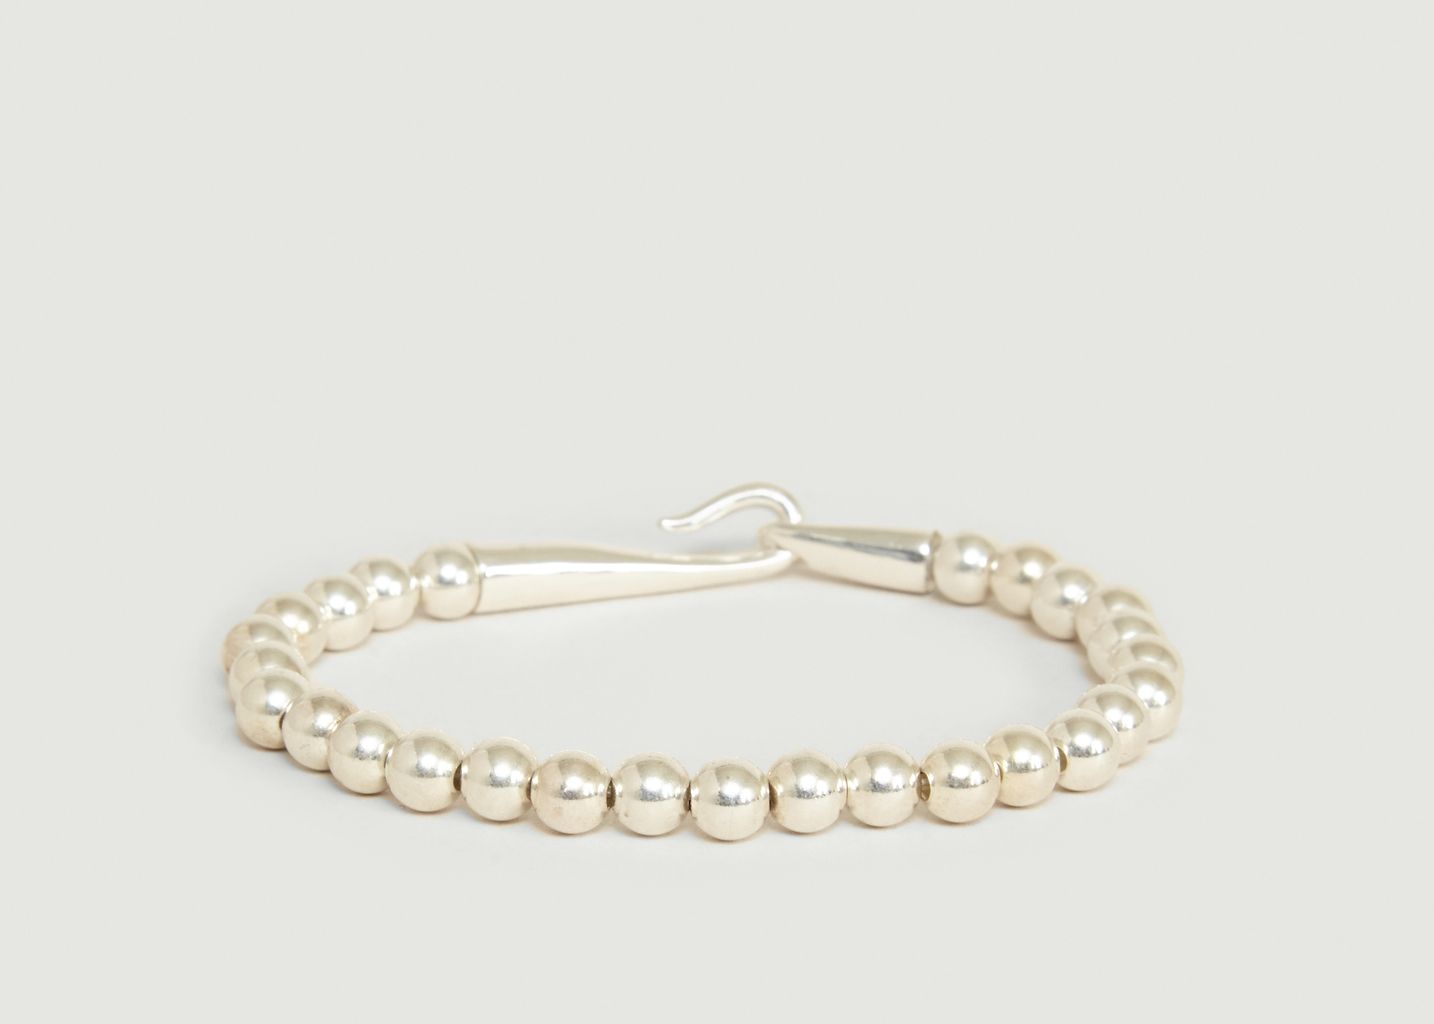 Bracelet Perles Argent 925 et Fermoir Limpide - Orner